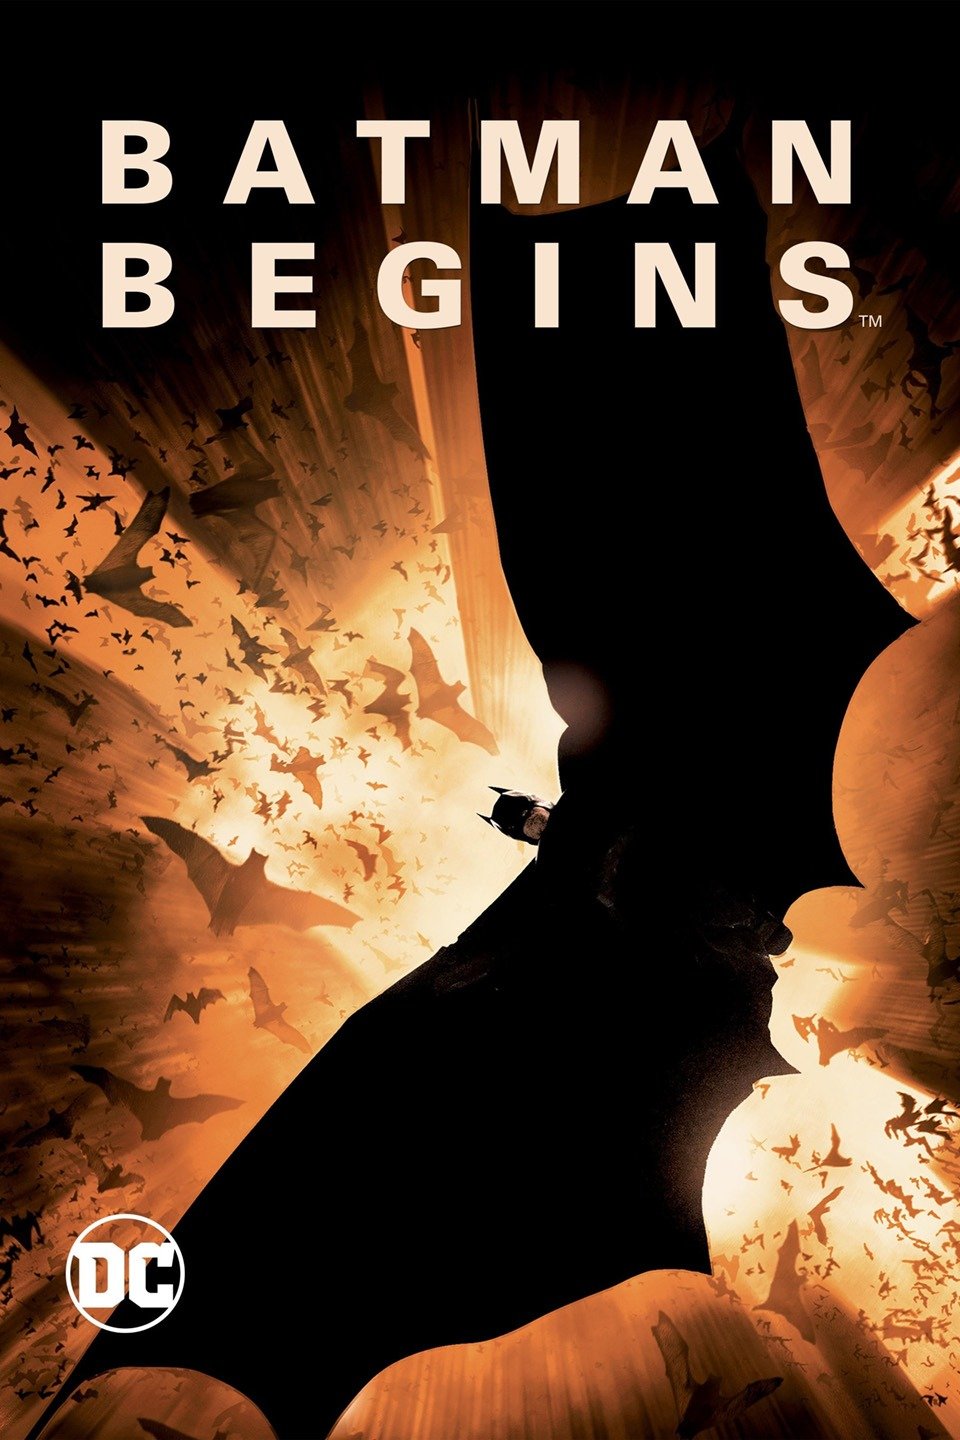 [MINI Super-HQ] Batman Begins (2005) แบทแมน บีกินส์ [1080p] [พากย์ไทย 5.1 + อังกฤษ DTS] [บรรยายไทย + อังกฤษ] [เสียงไทย + ซับไทย]